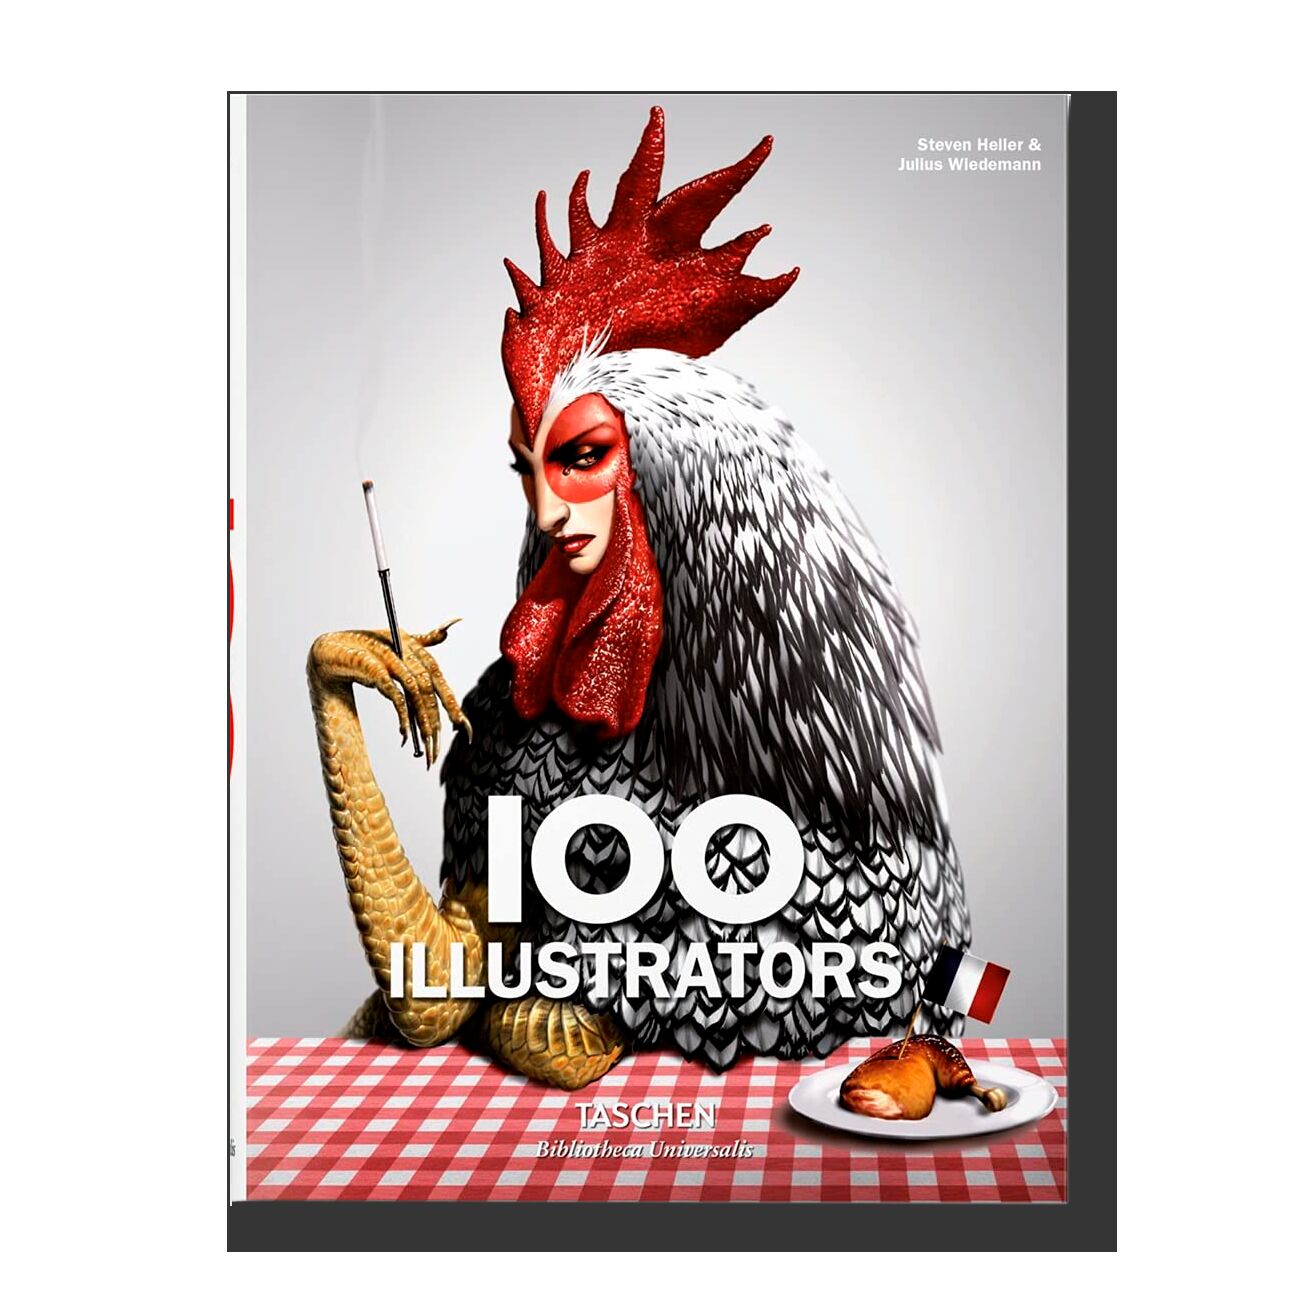 100 Illustrators (Bibliotheca Universalis)